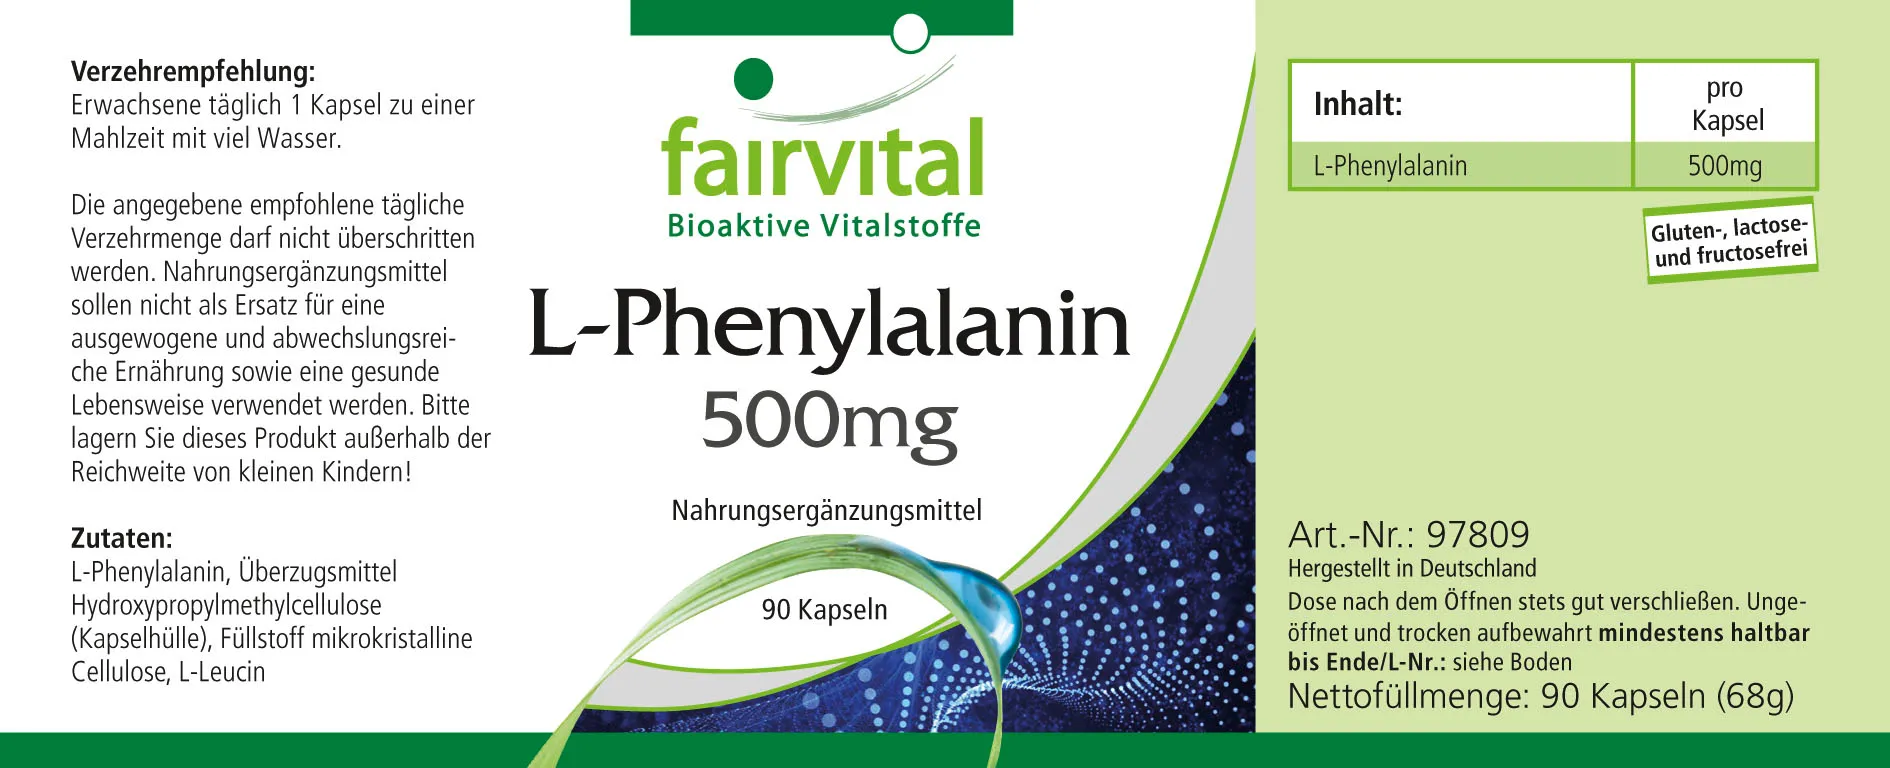 L-Fenilalanina 500mg - 90 Cápsulas